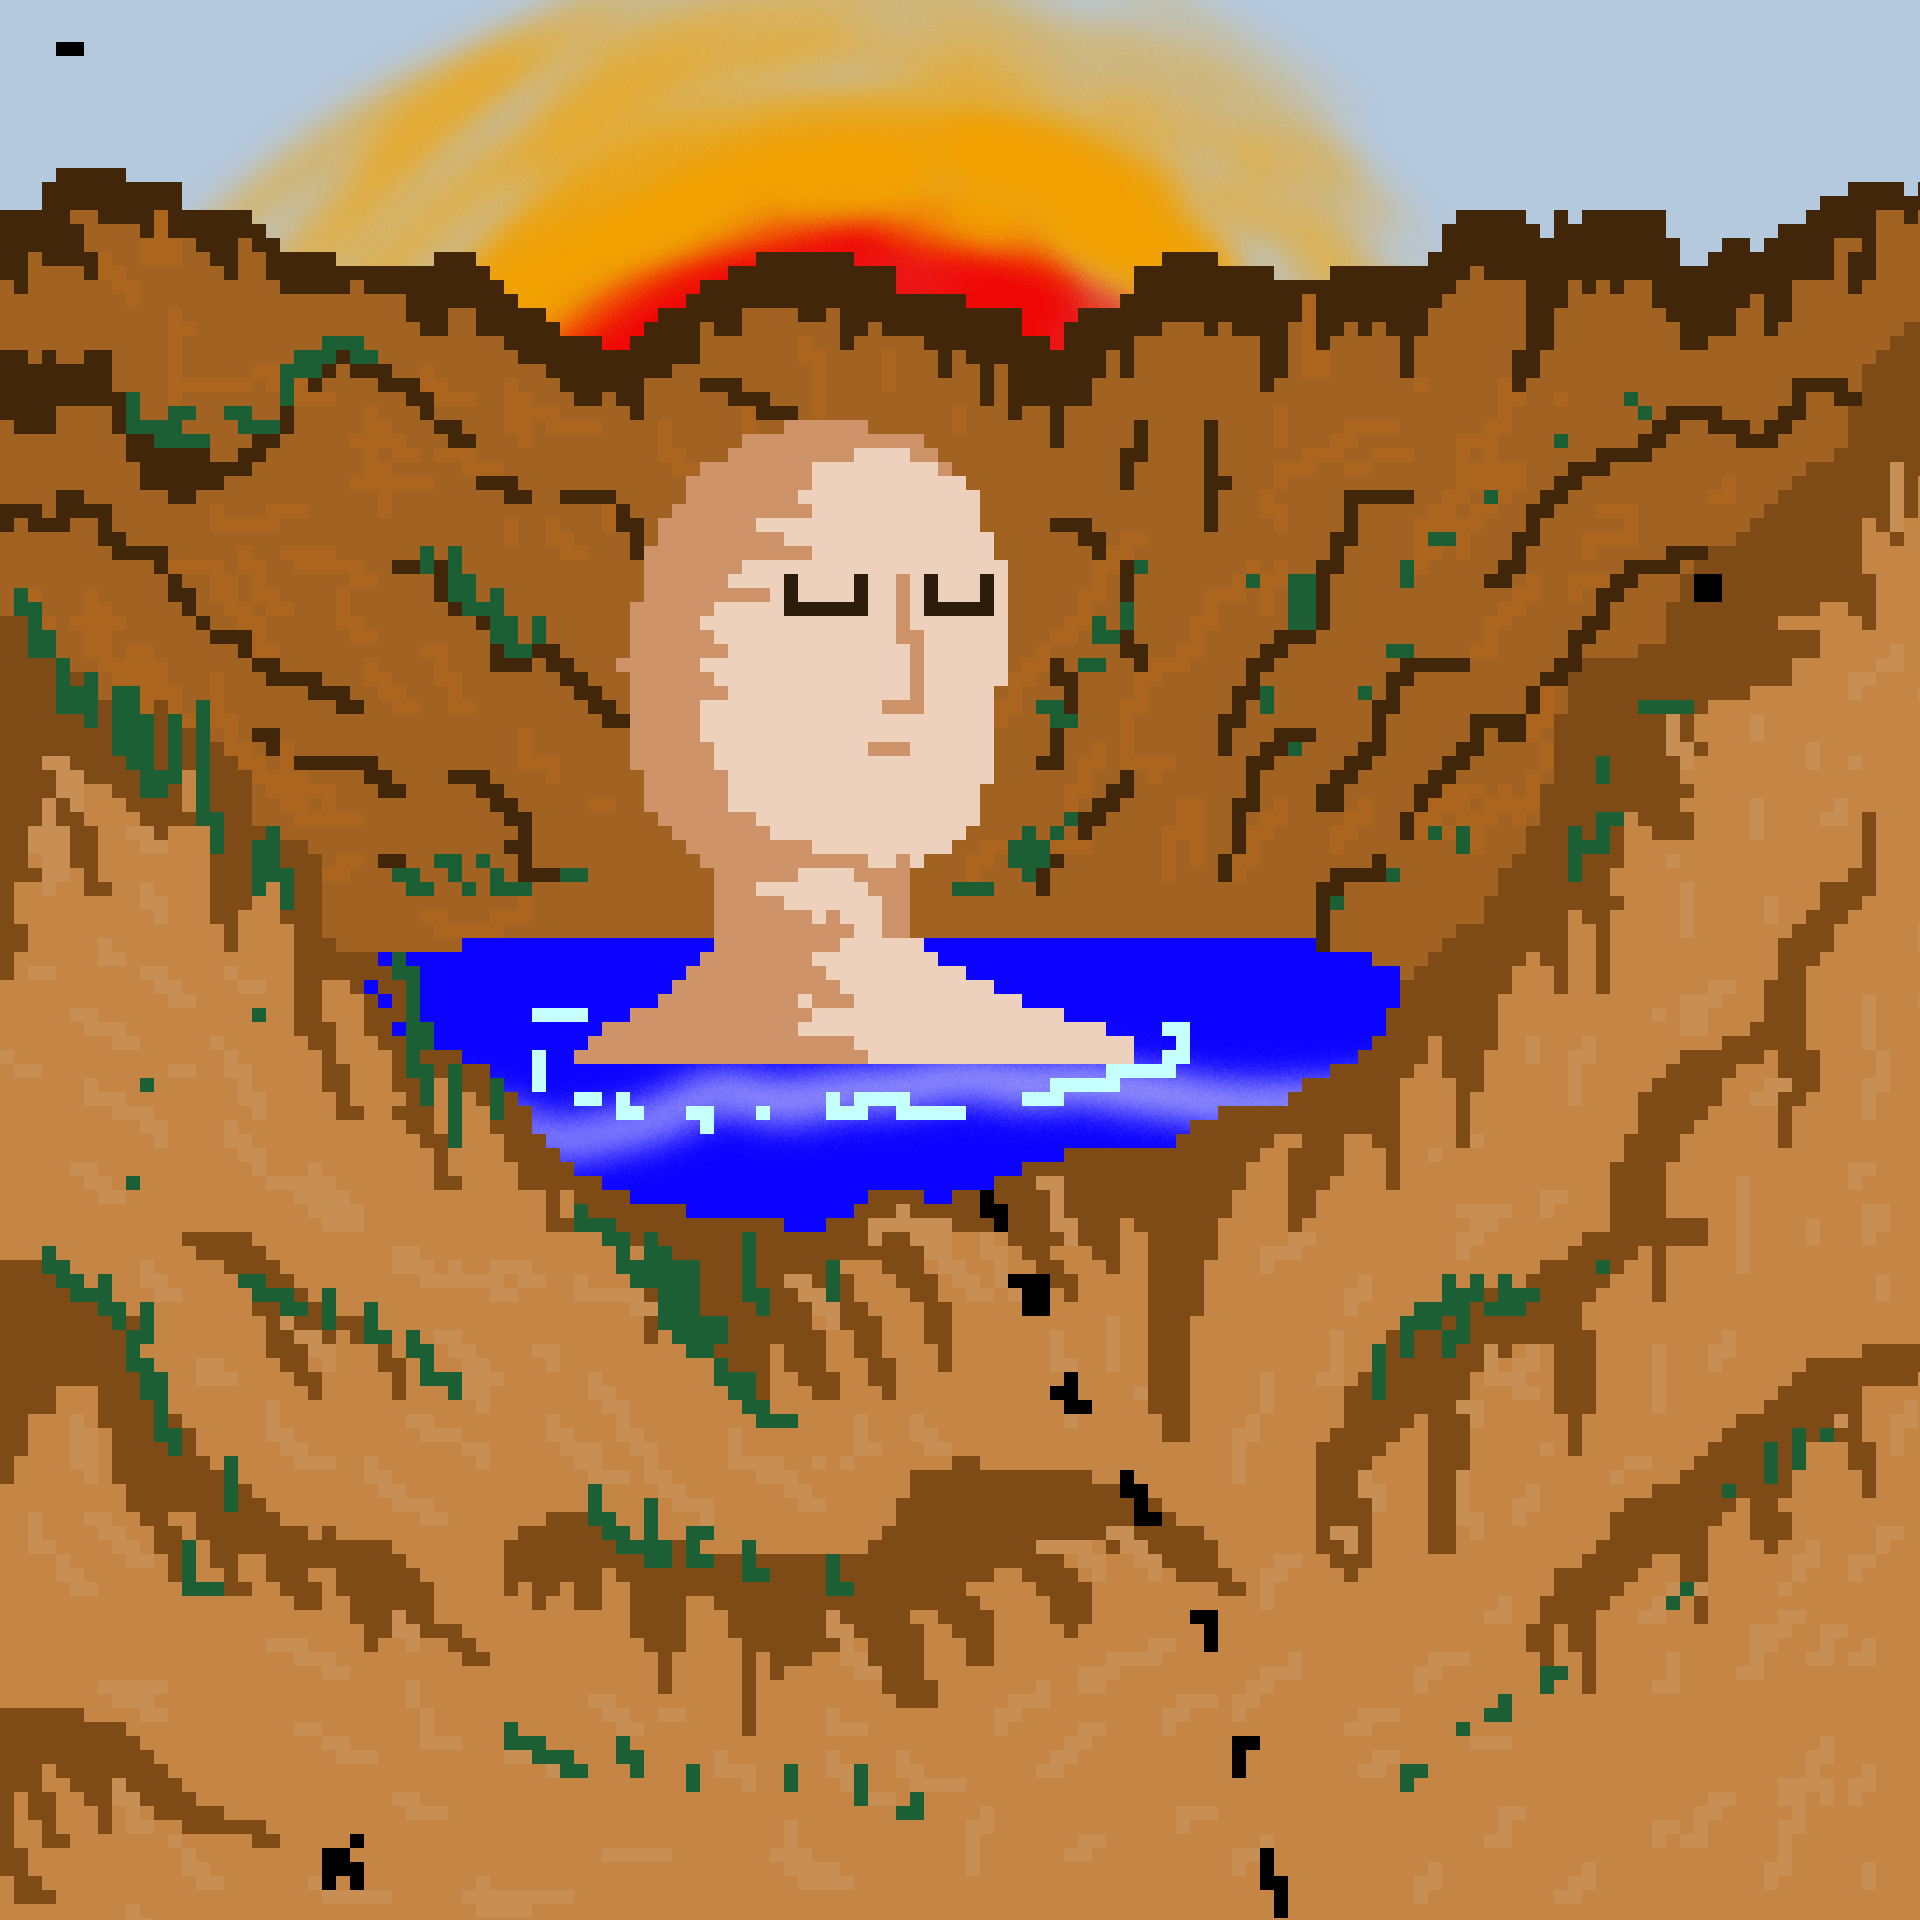 Holy Hot Springs